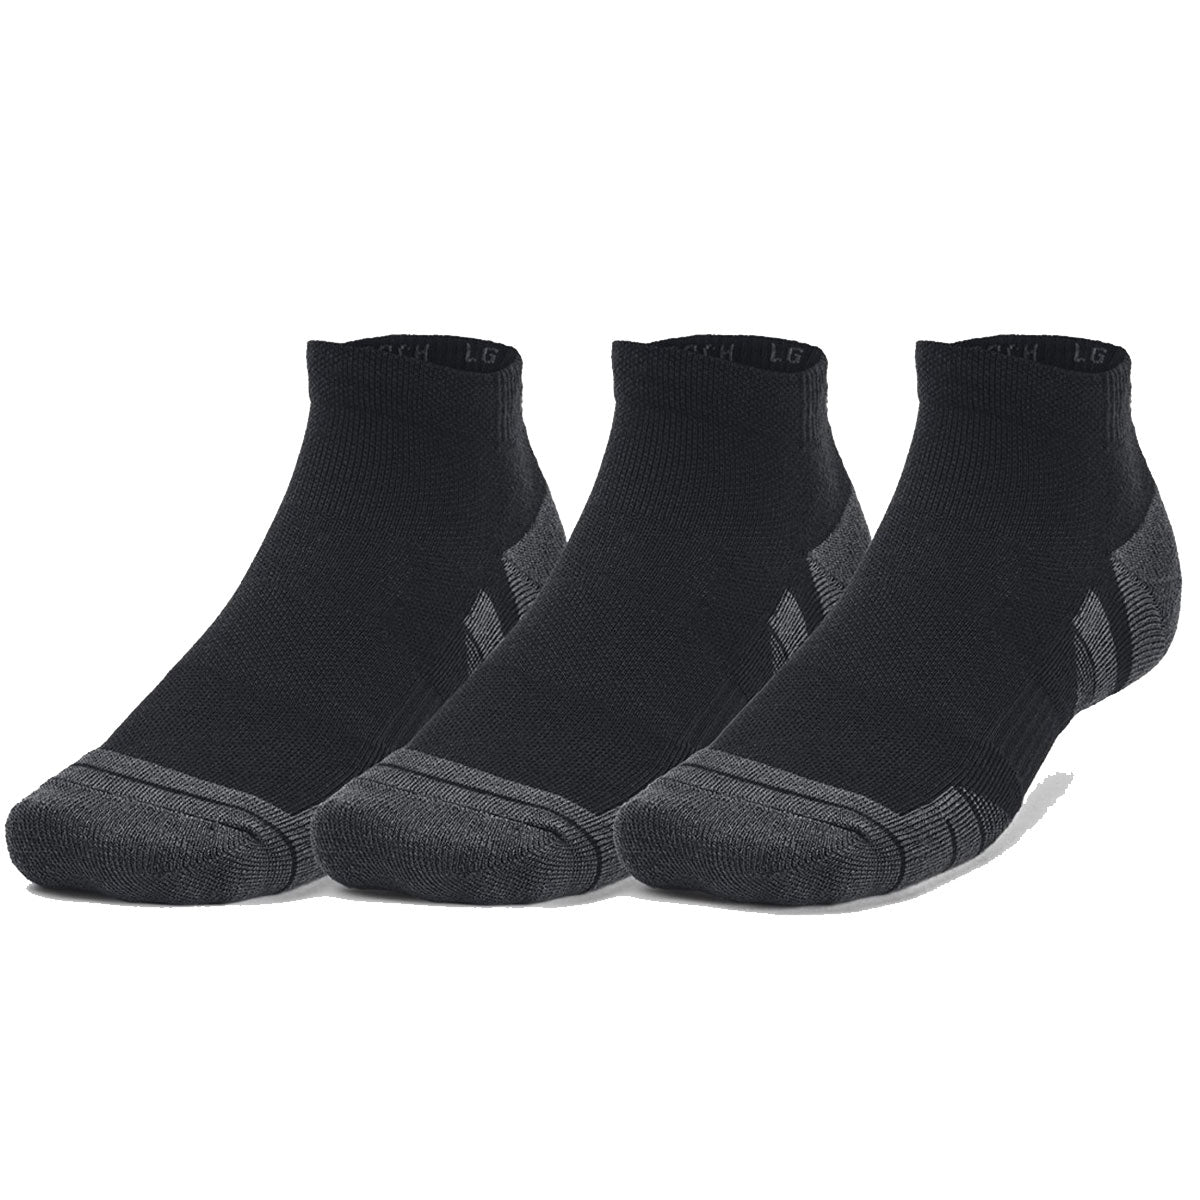 Under Armour Performance Tech 3 Pack Low Cut Socks - Adult - Black/Jet Grey